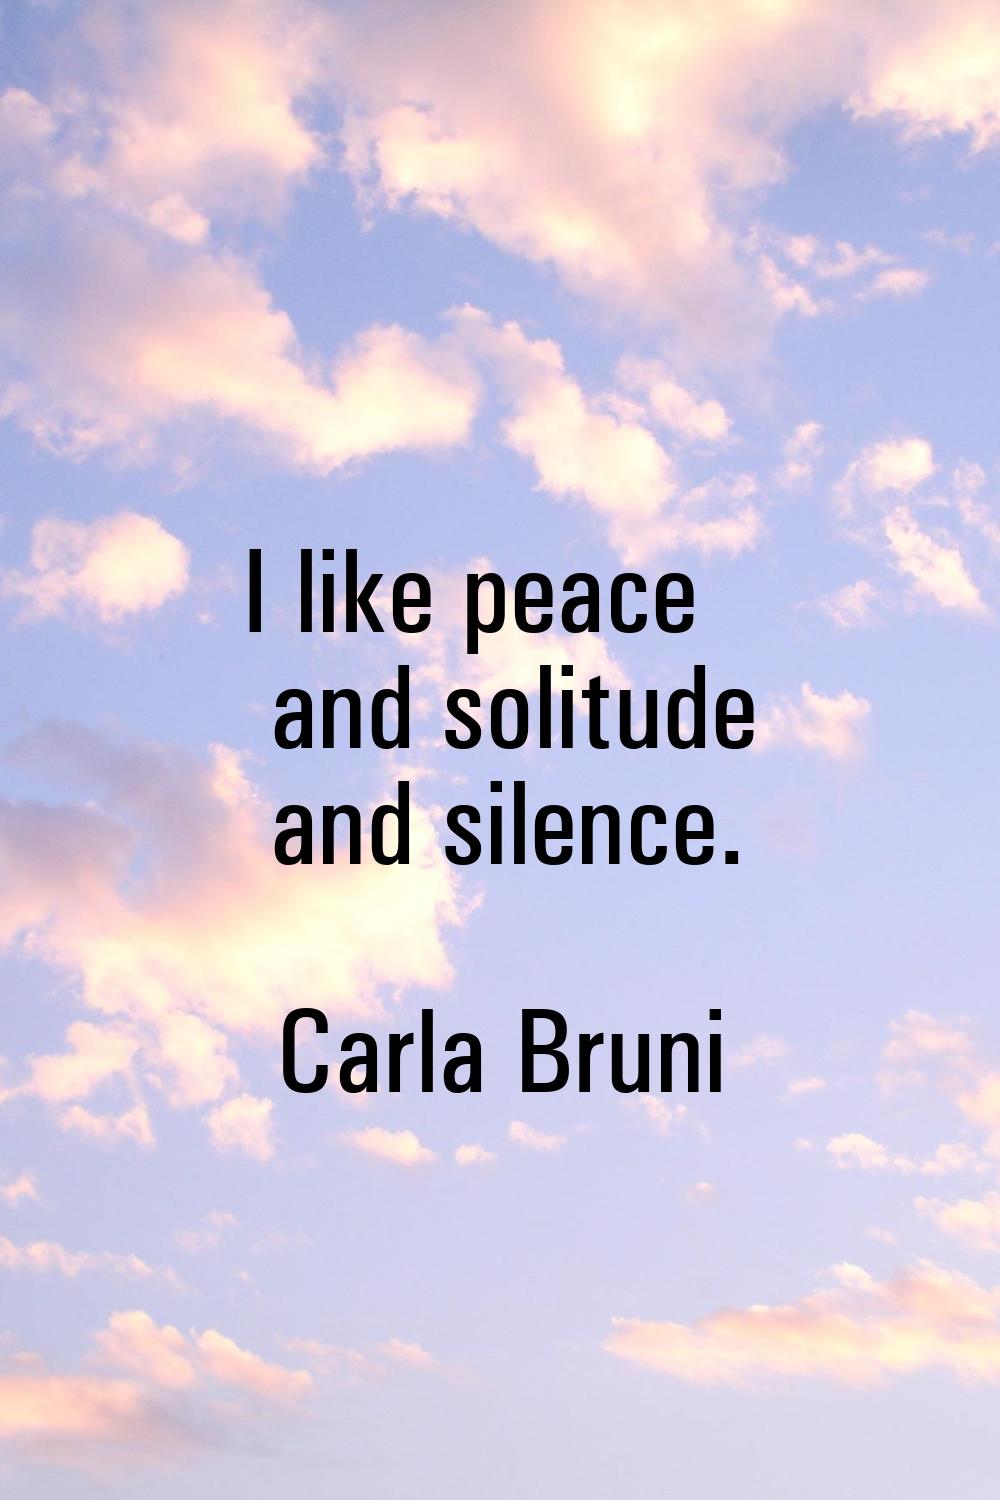 I like peace and solitude and silence.